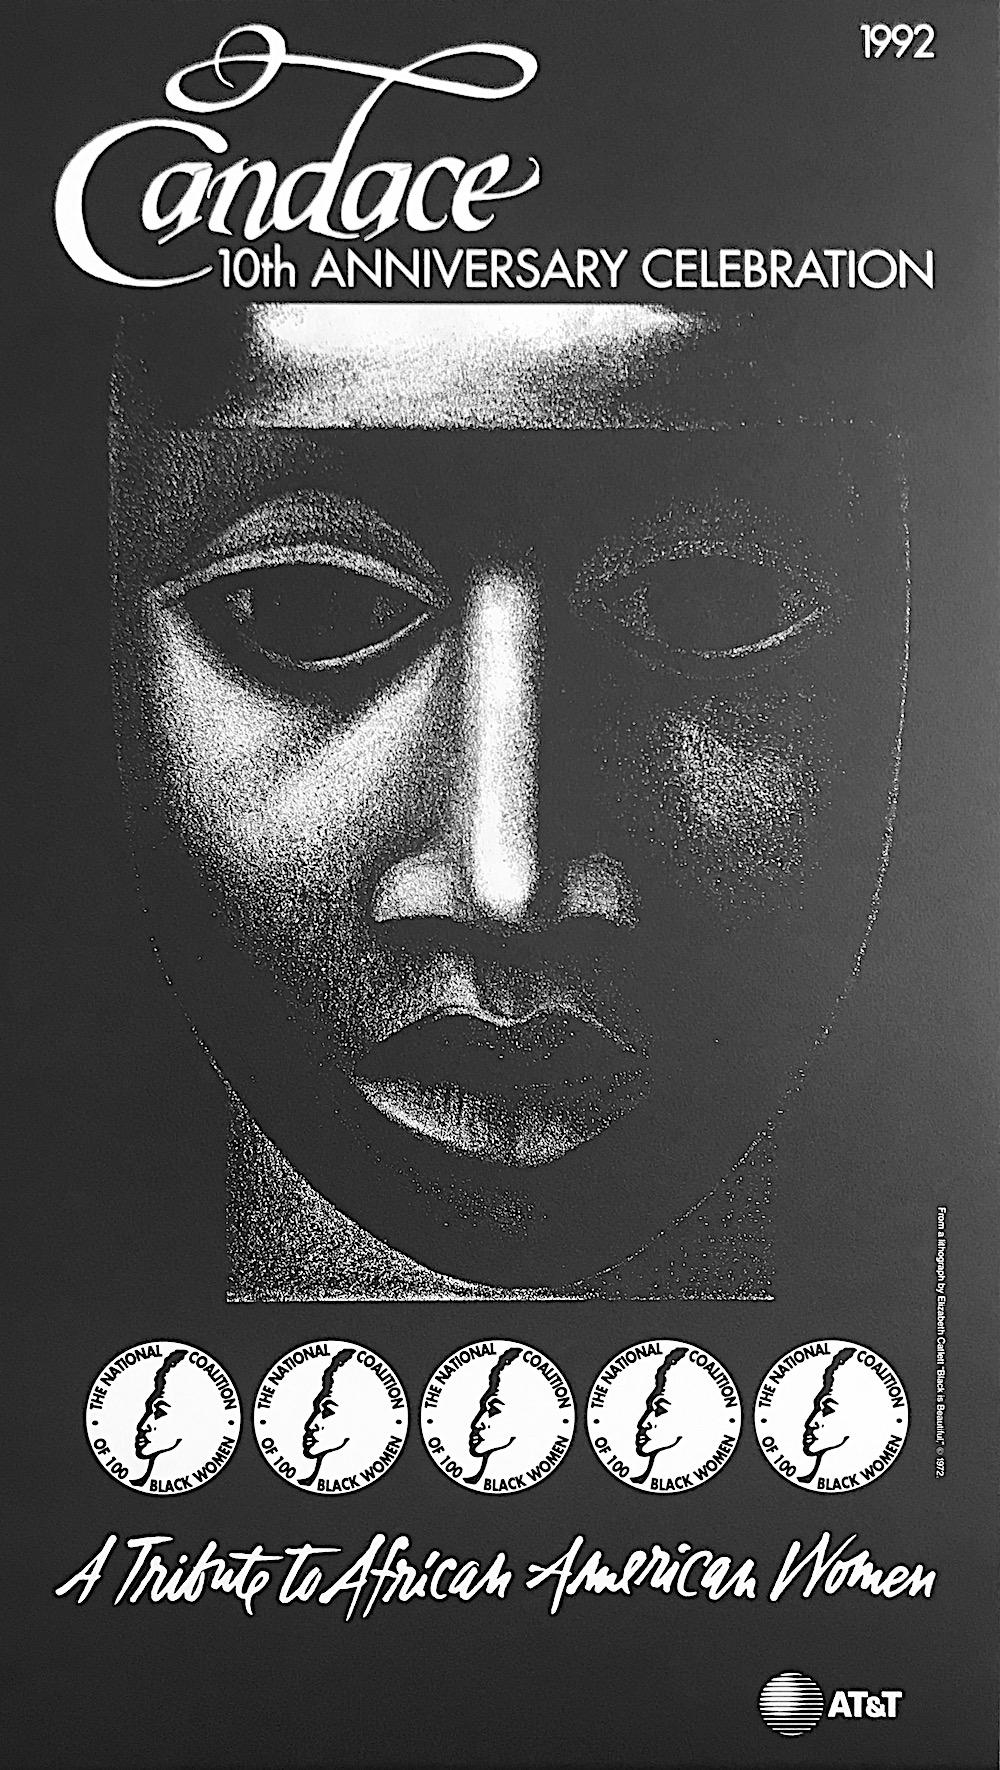 Elizabeth Catlett Print - CANDACE 1992 Tribute To African American Women, Black Woman Face Portrait 